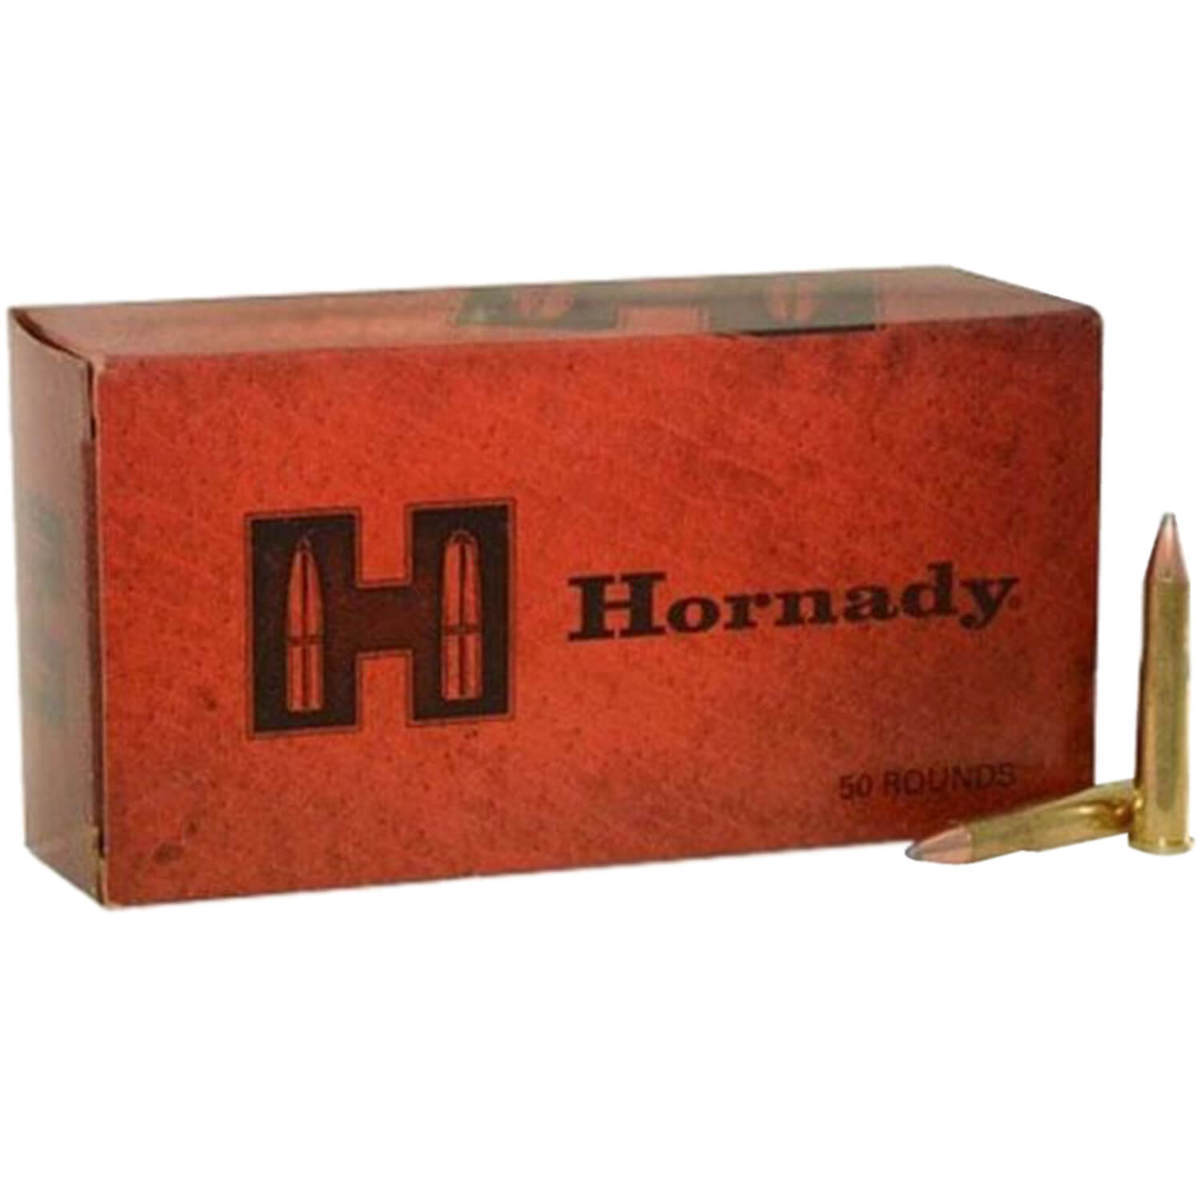 22 Hornet Ammo Box, 50 Round Ammo Box